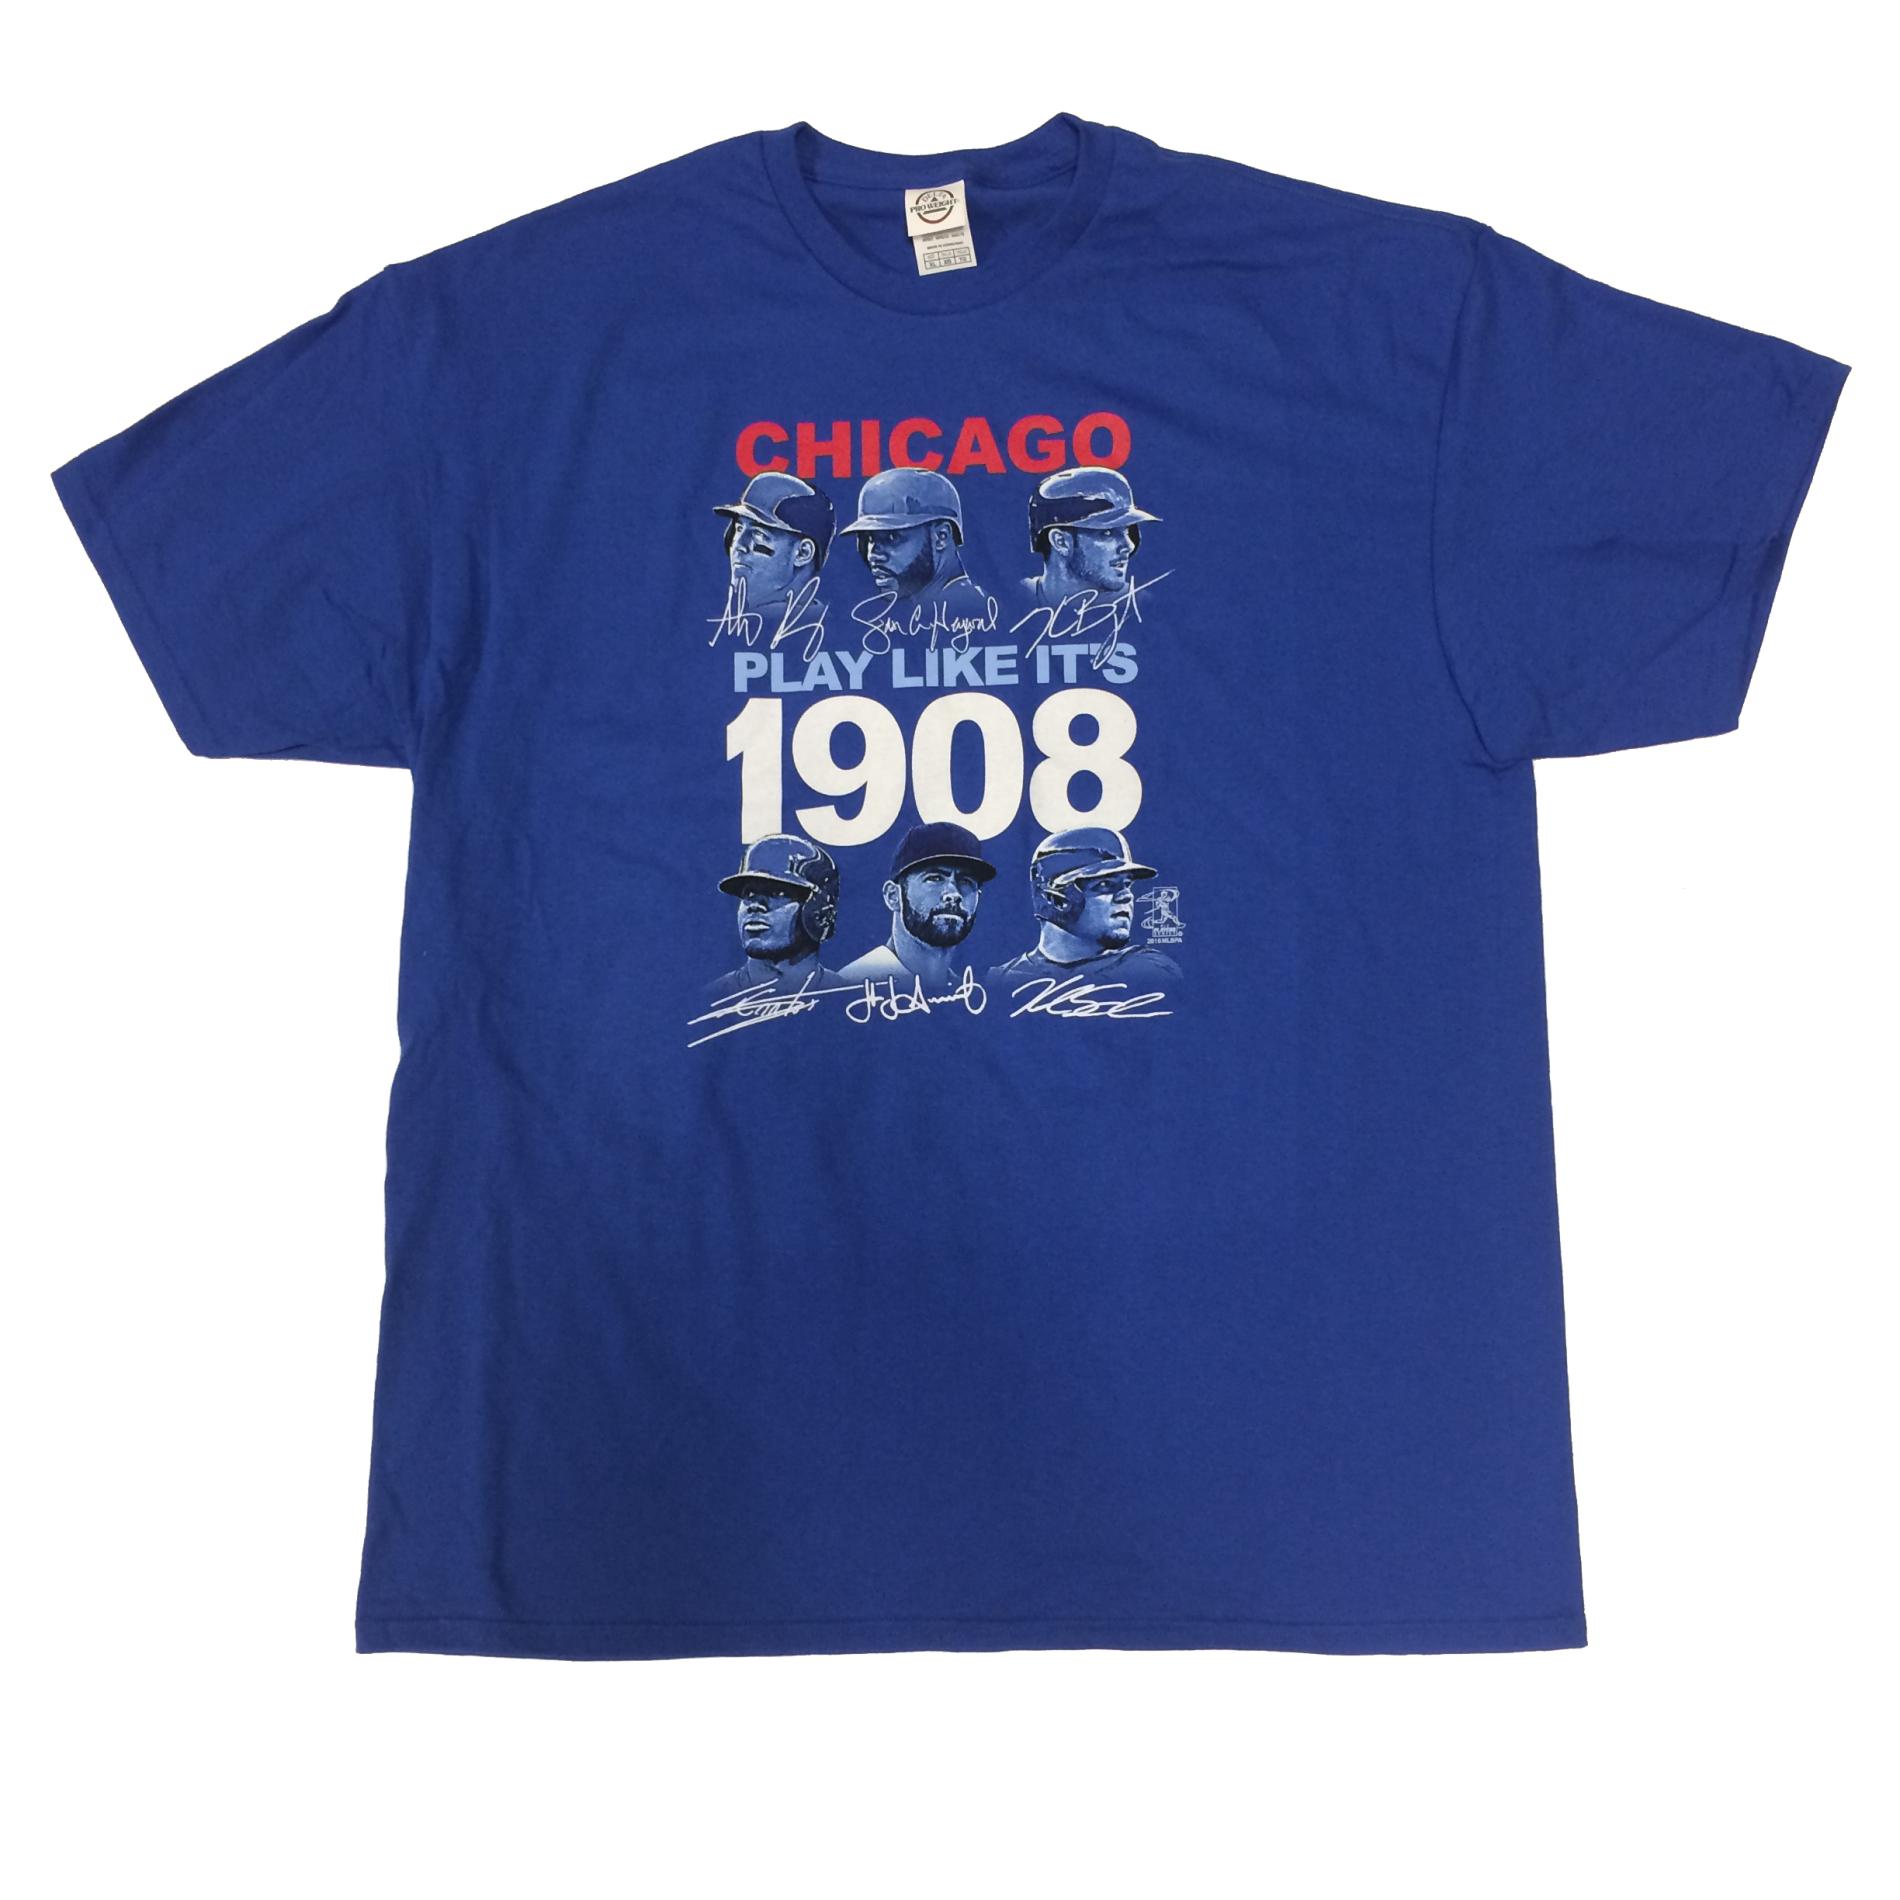 MLB Men's T-Shirt - Chicago Cubs